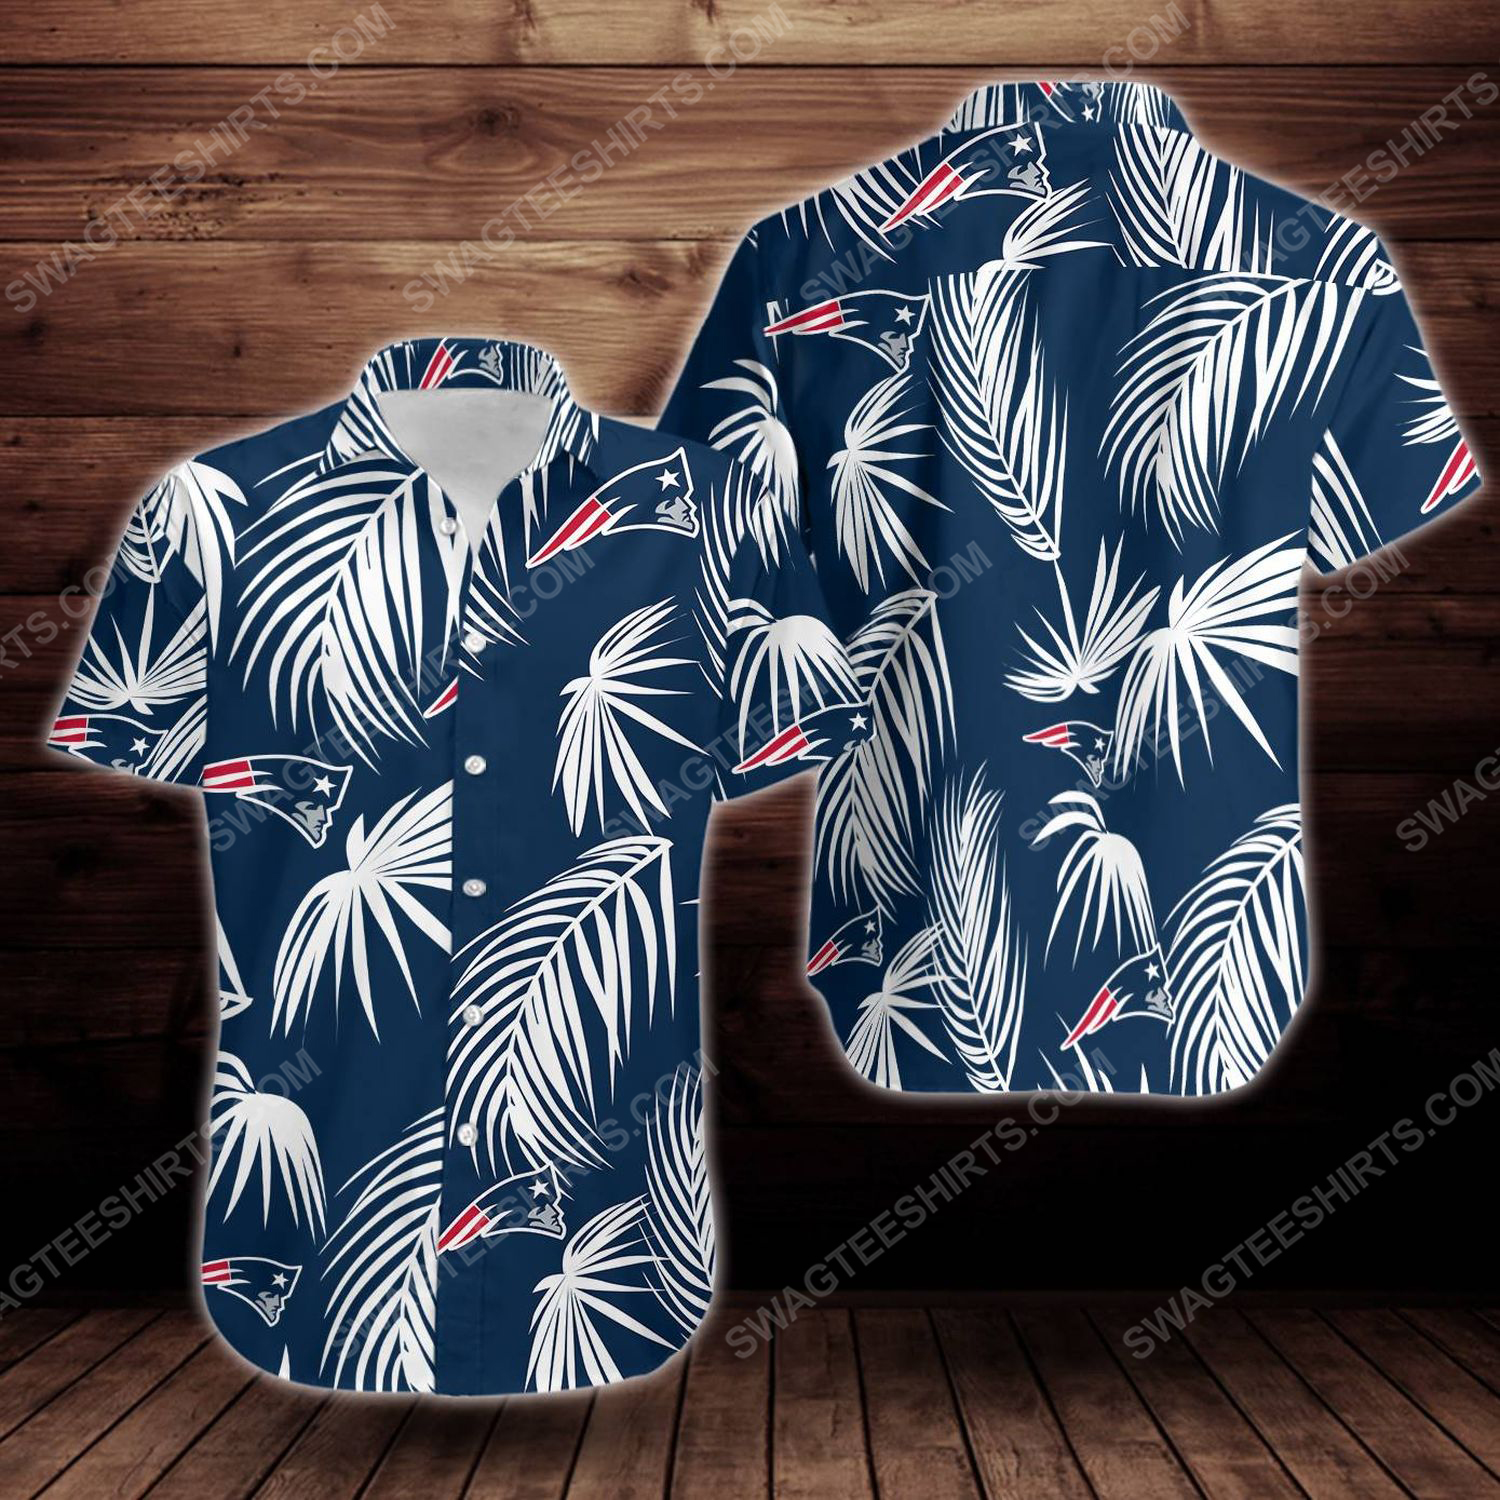 [special edition] Tropical summer new england patriots short sleeve hawaiian shirt – maria